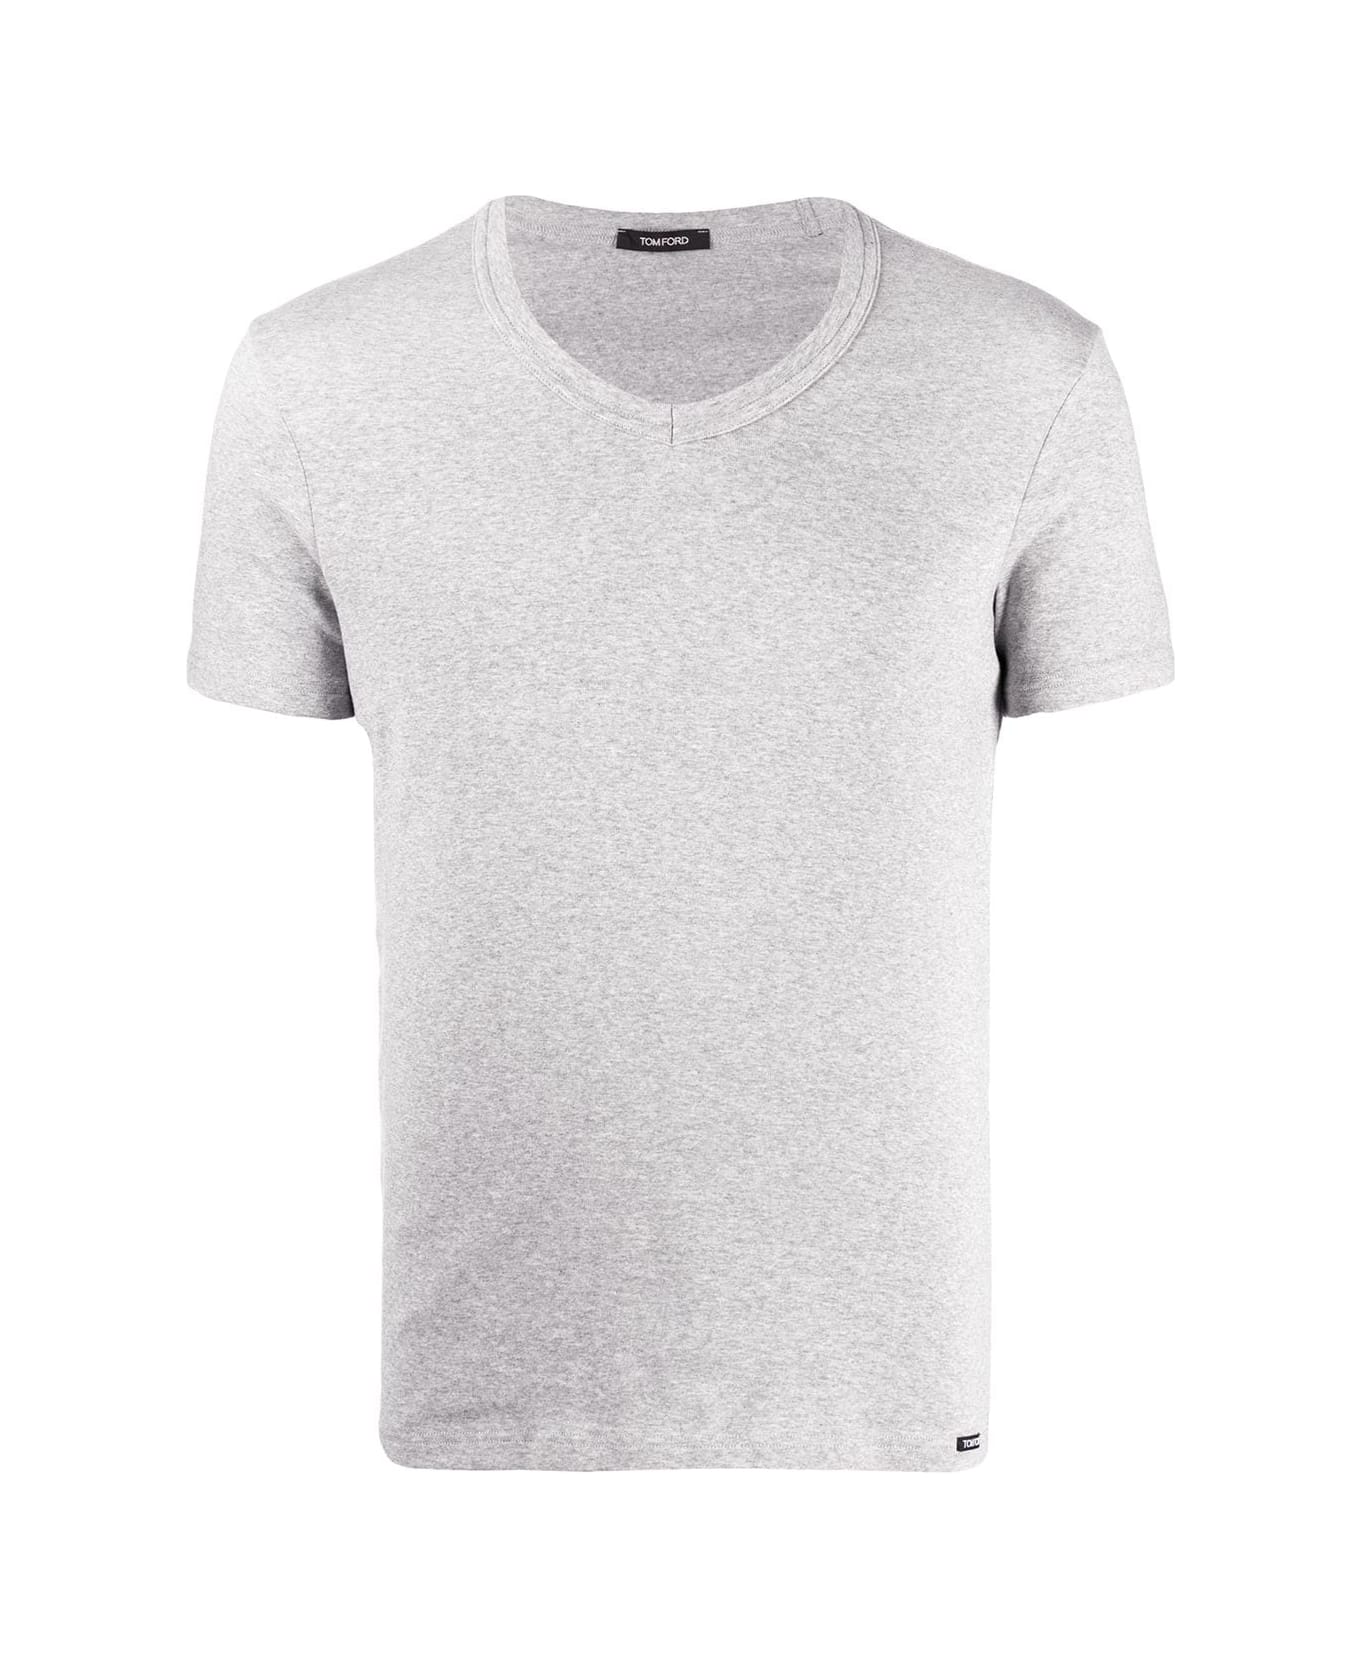 Tom Ford Man's Cotton V-neck T-shirt - Grey